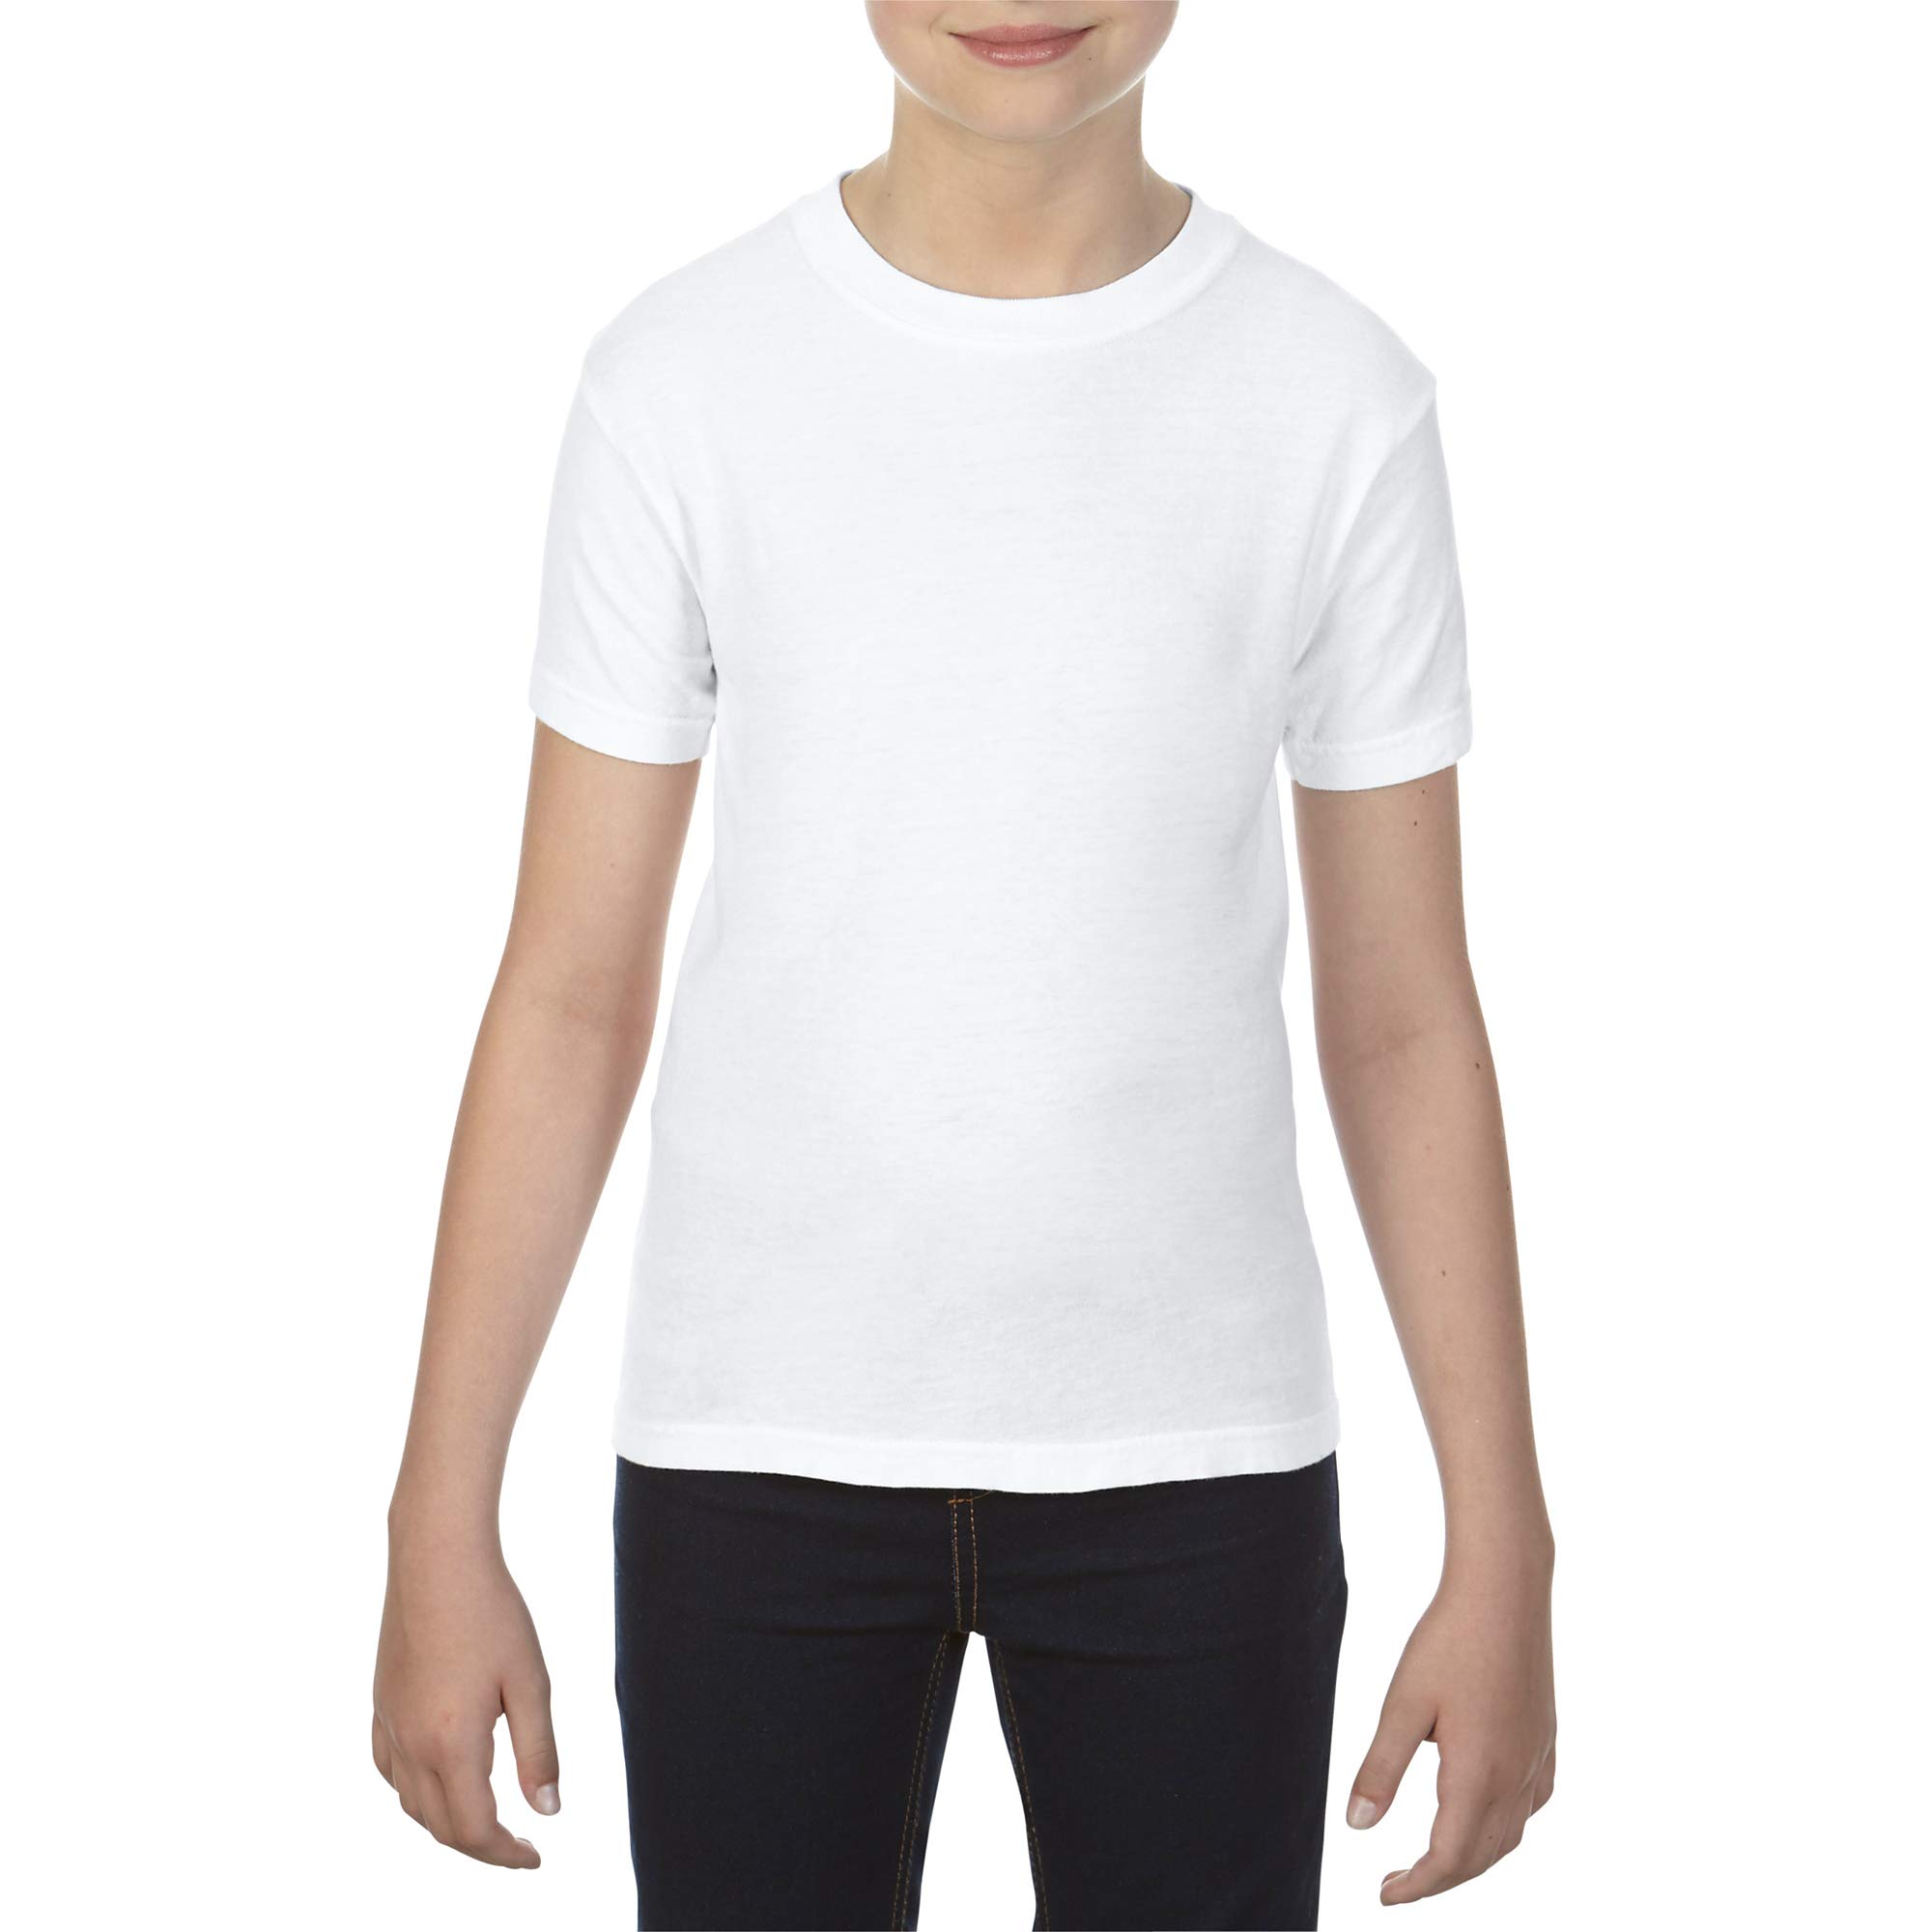 Comfort Colors Kids' Ring Spun T-Shirt, 3-Pack, Style 9018